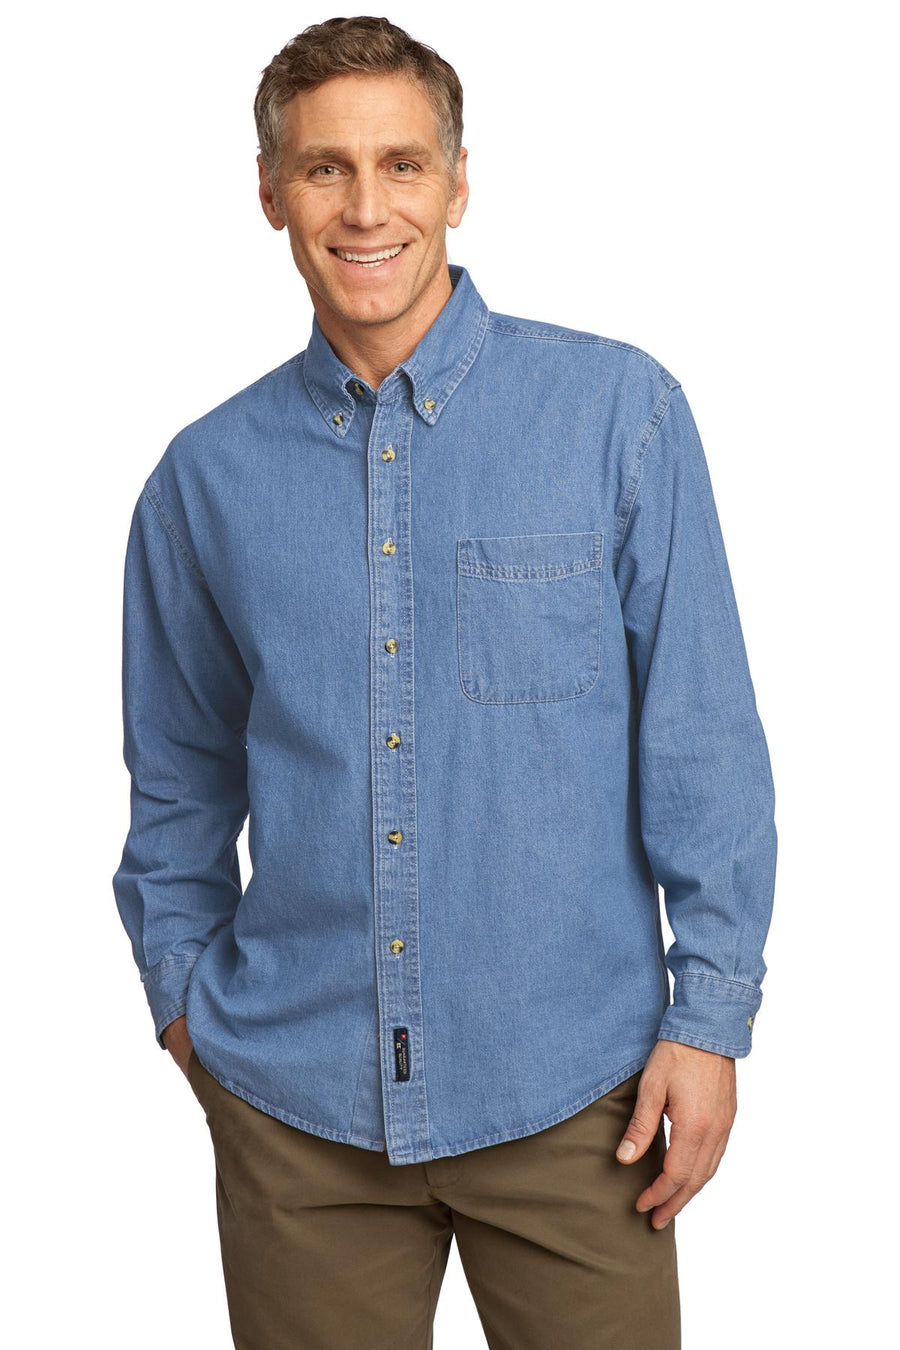 Port & Company - Long Sleeve Value Denim Shirt.